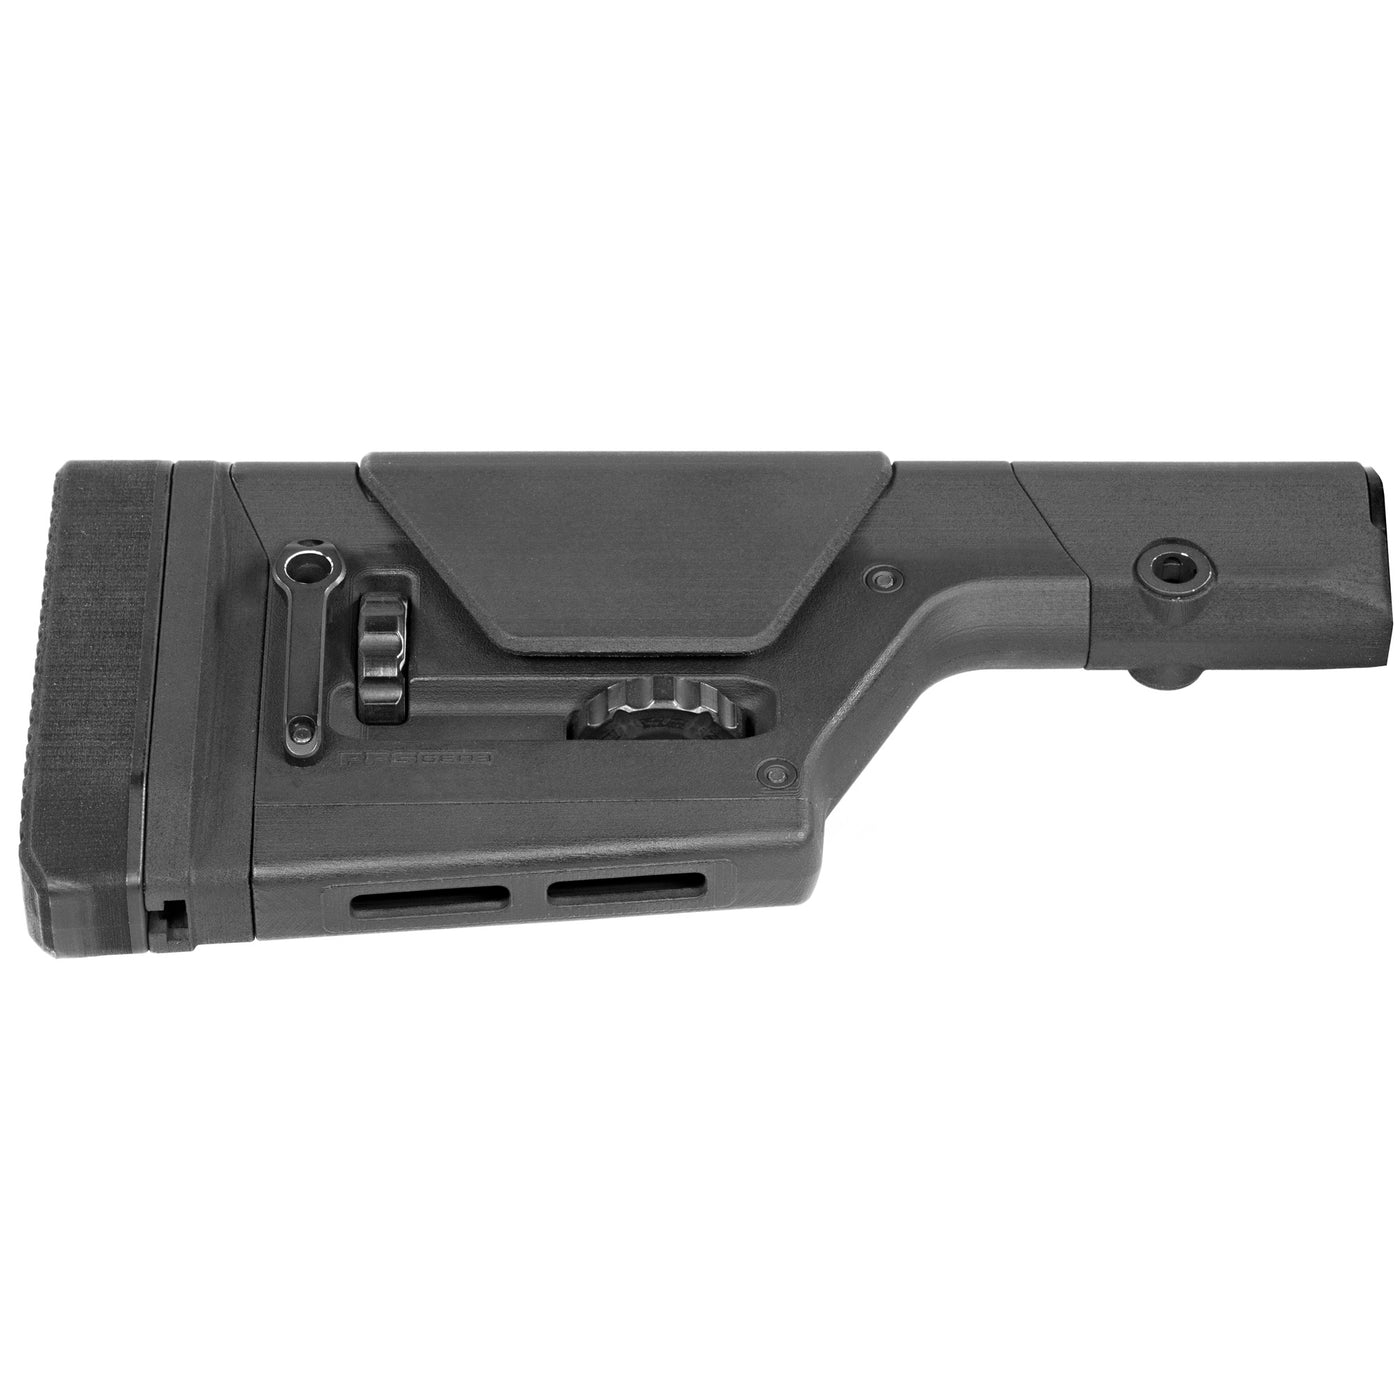 Magpul Stock Prs3 Ar15 Rifle - And Mil-spec Carbine Black